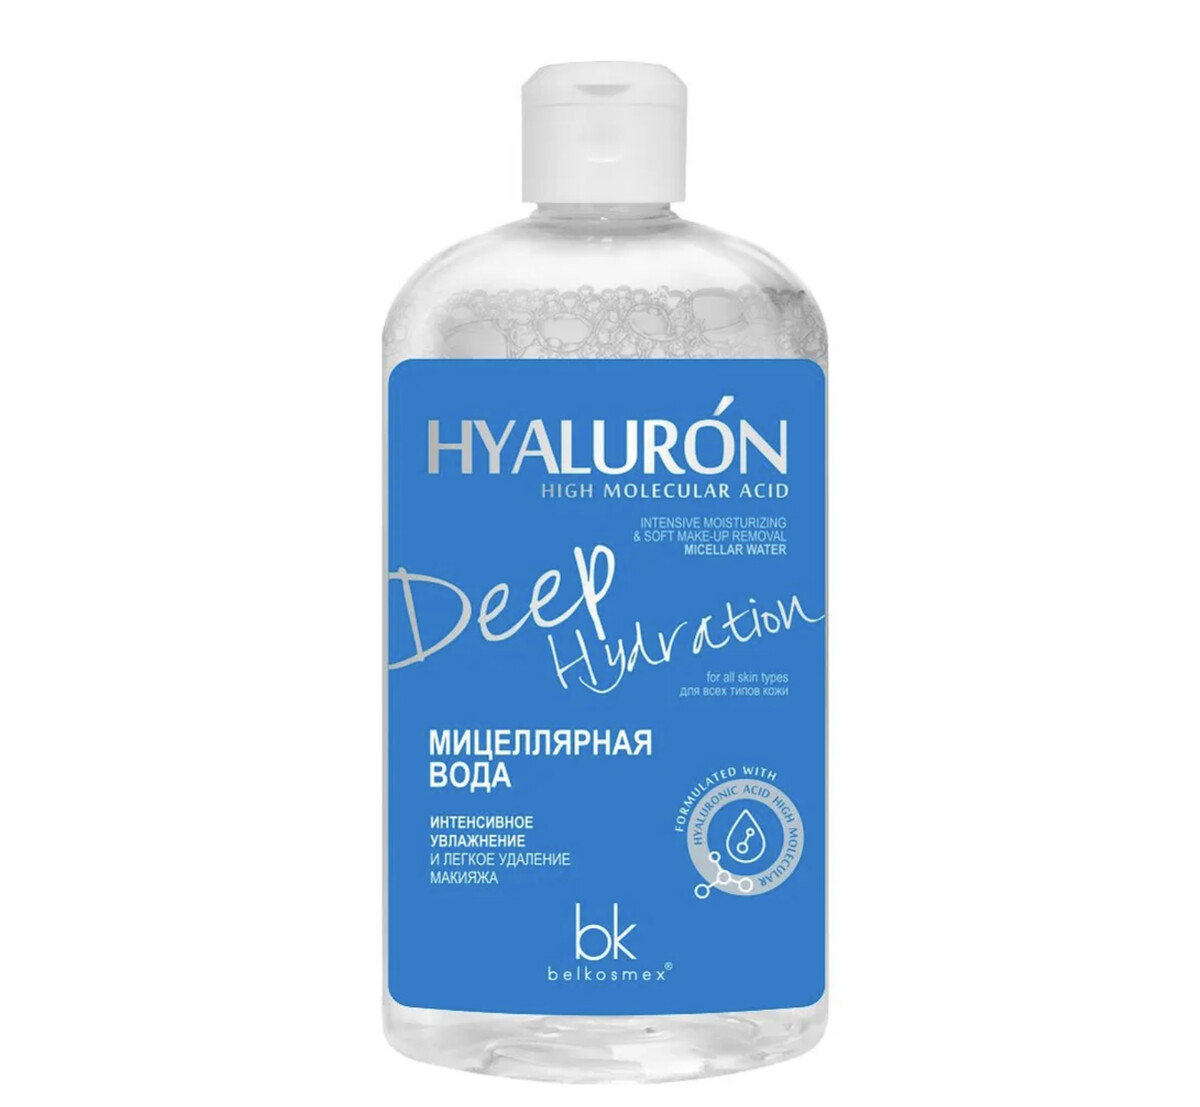 Hialuron deep hydration     500